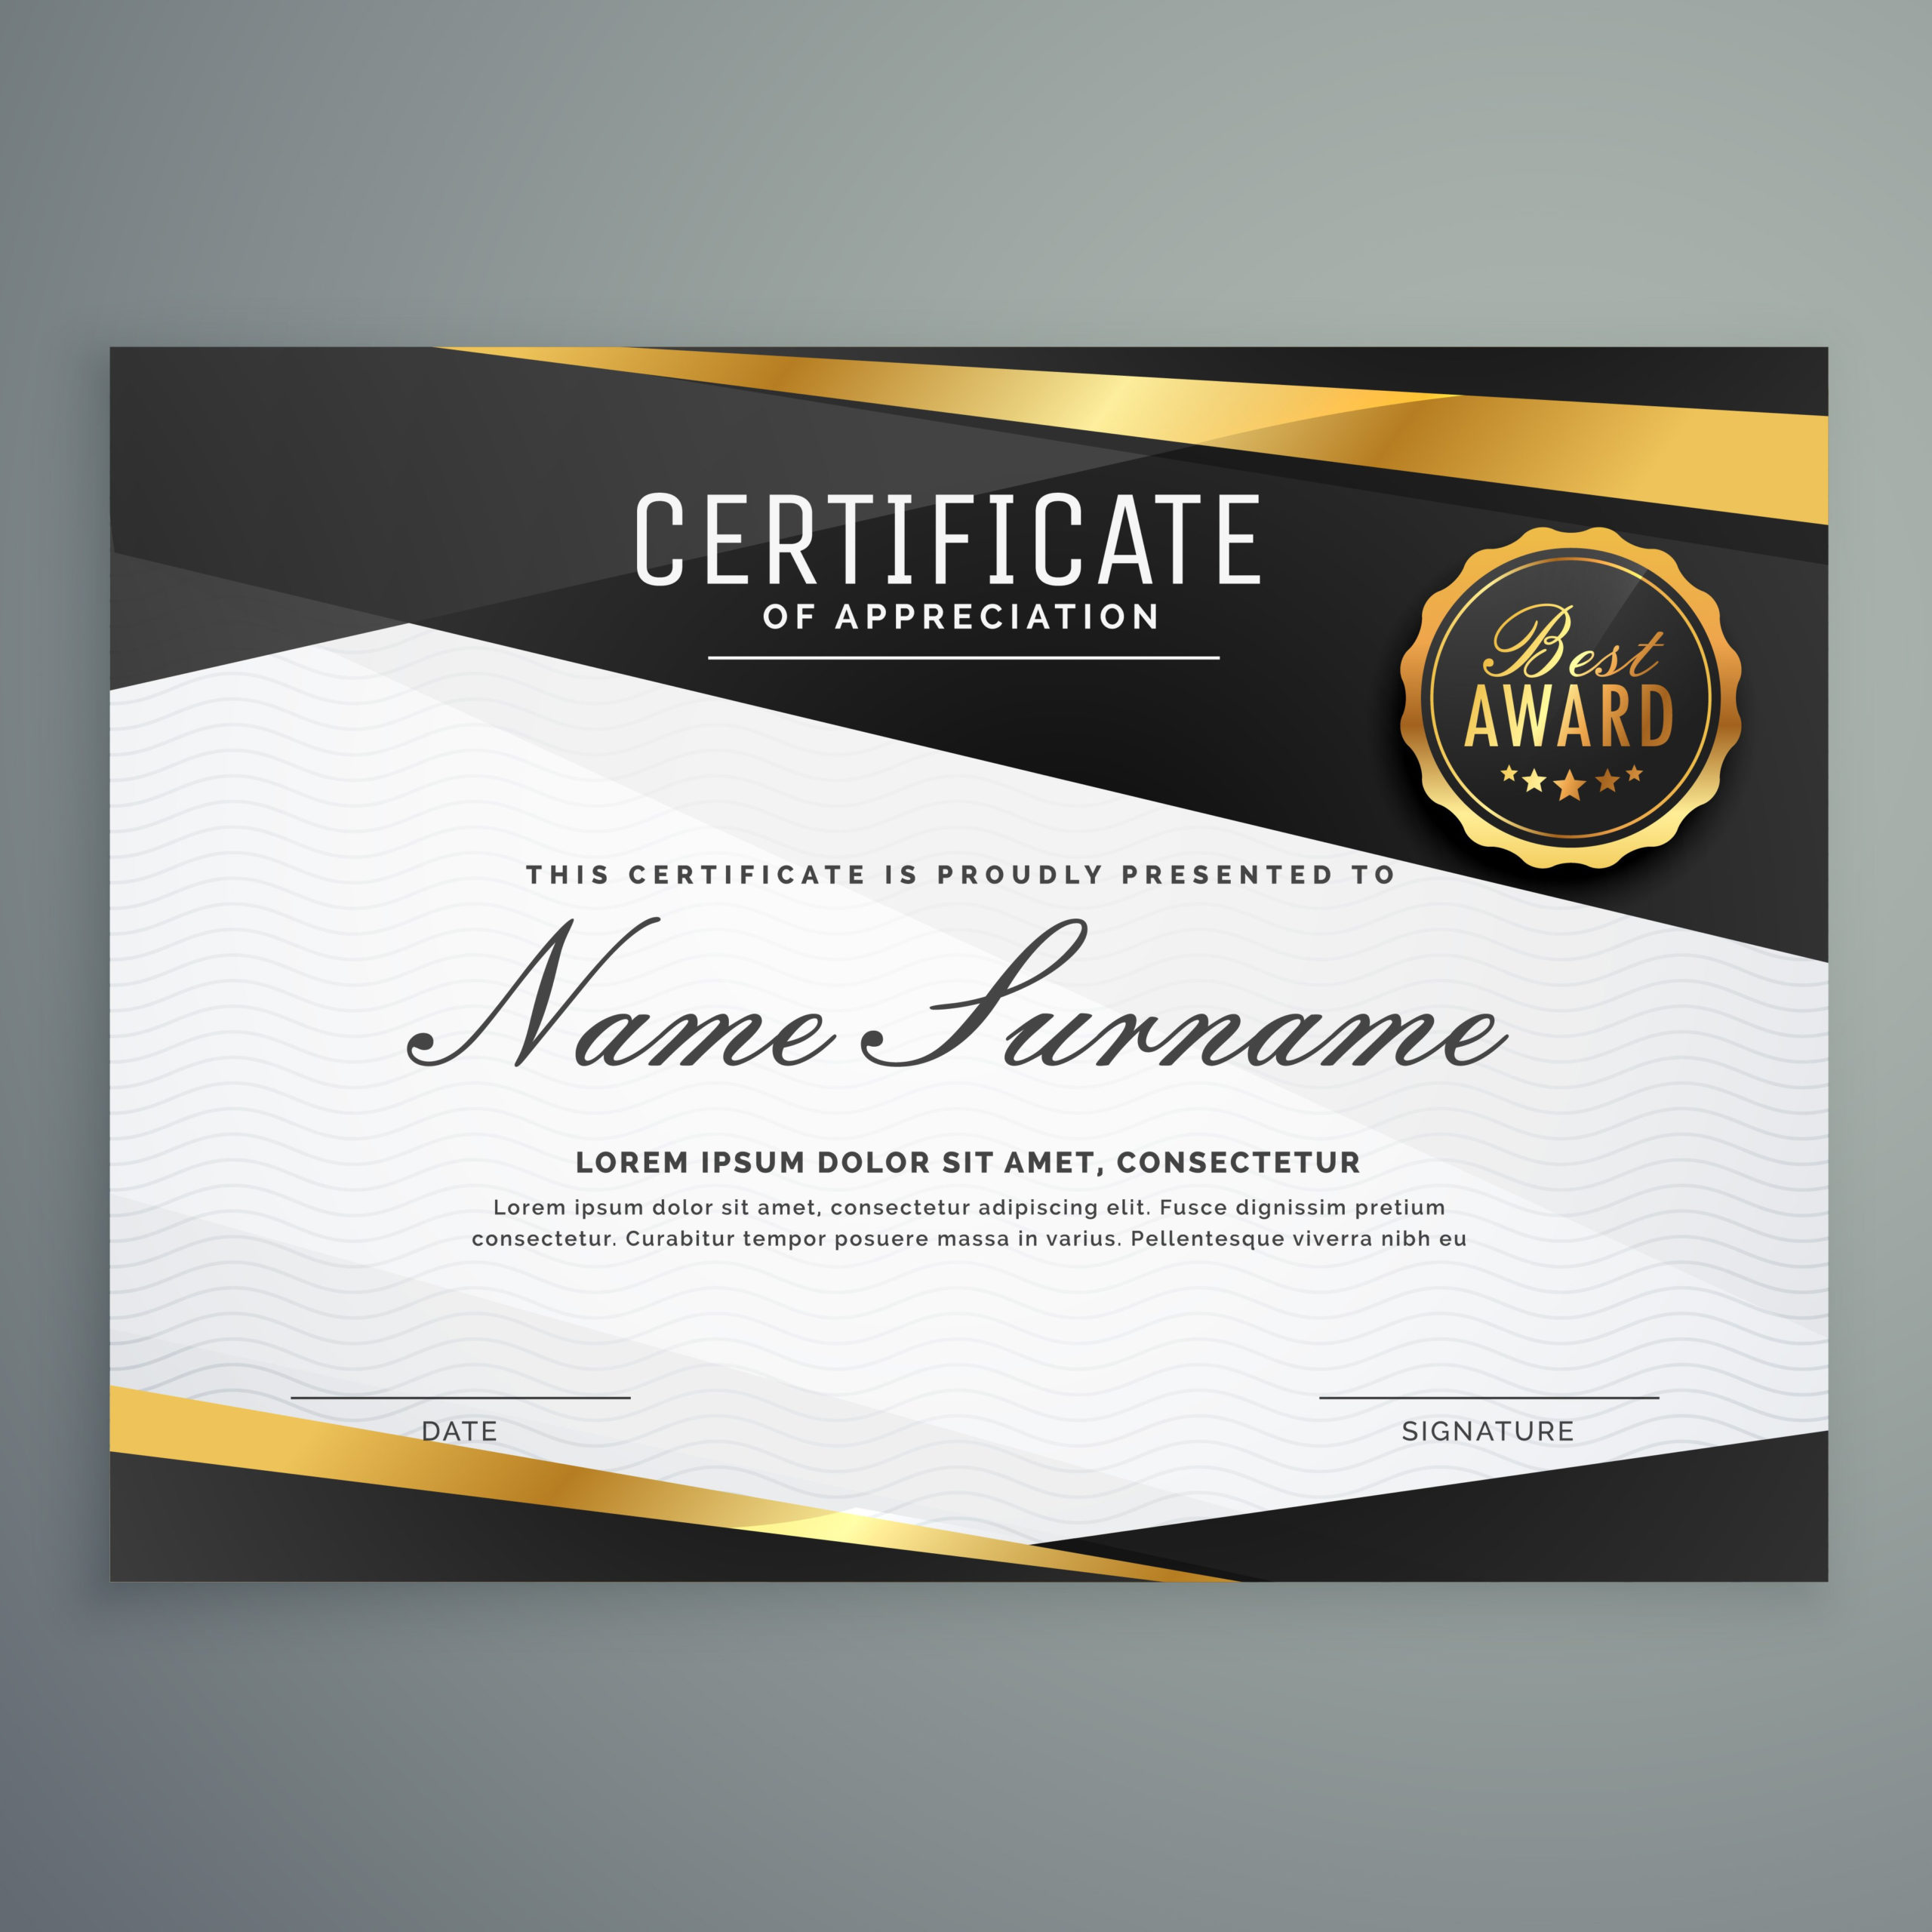 Stylish Certificate Of Appreciation Award Template In With Regard To New Certificates Of Appreciation Template